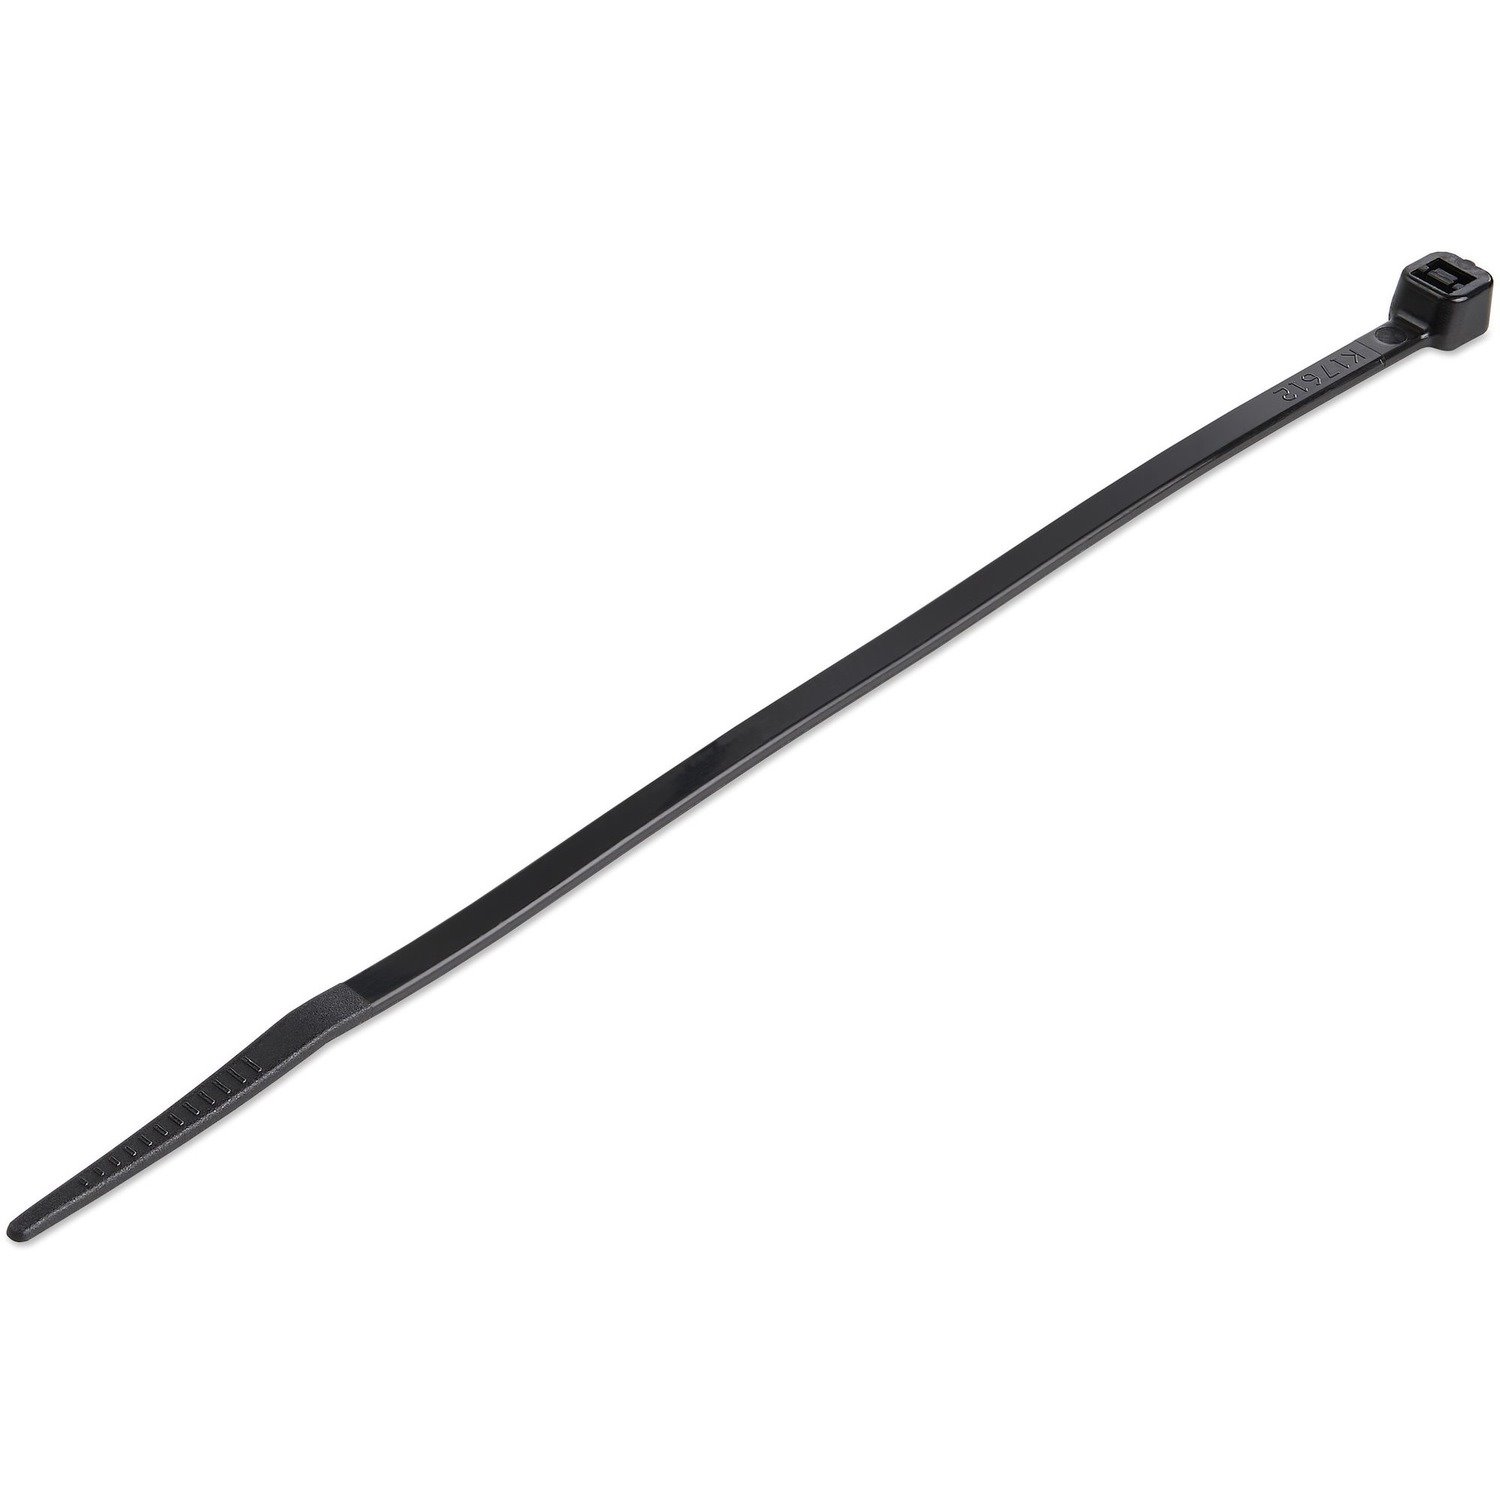 StarTech.com 6"(15cm) Cable Ties, 1-3/8"(39mm) Dia, 40lb(18kg) Tensile Strength, Nylon Self Locking Zip Ties, UL Listed, 1000 Pack, Black